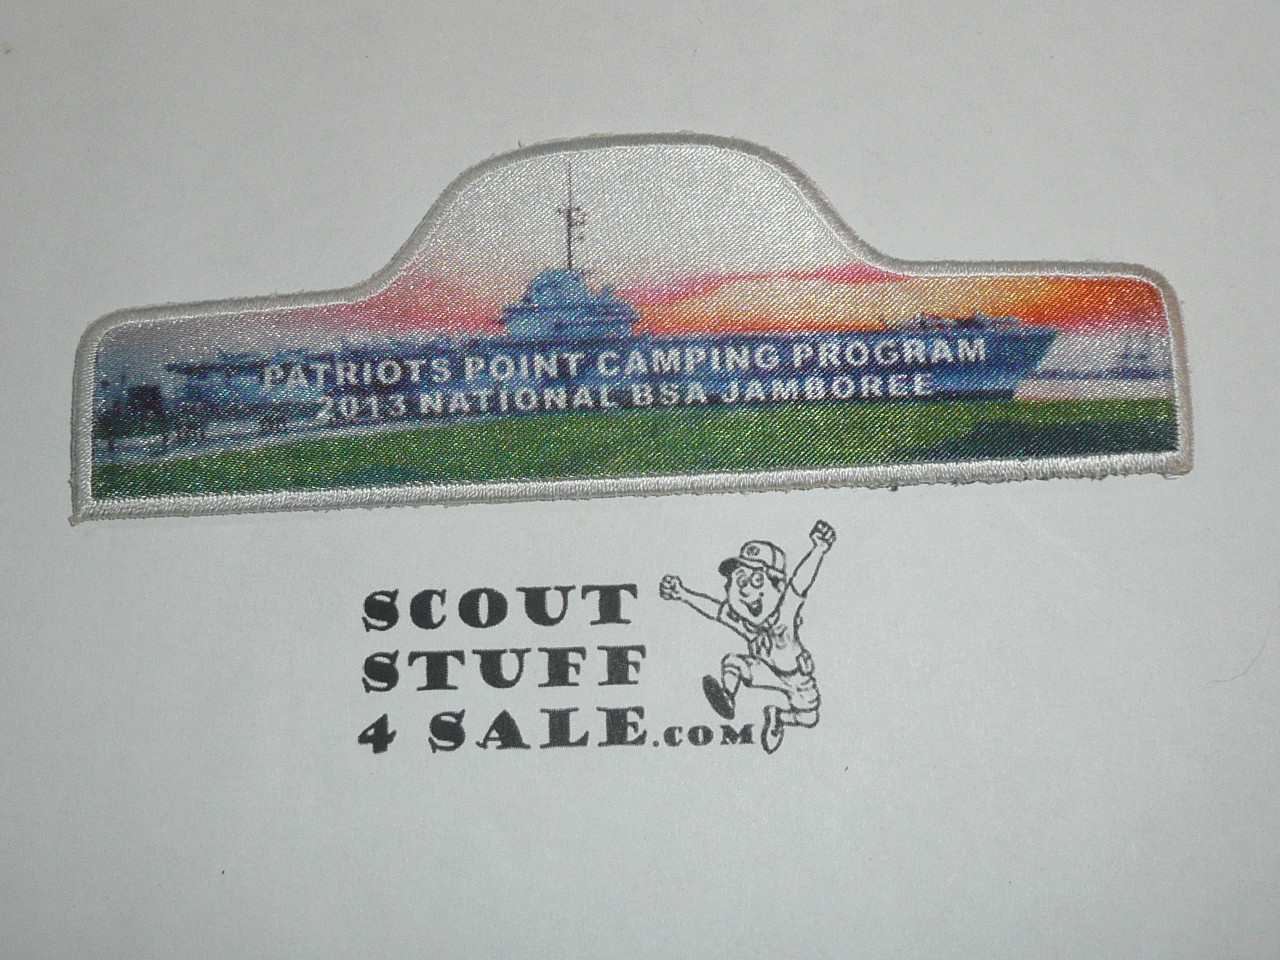 2013 National Jamboree Patriots Point Camping Program Patch